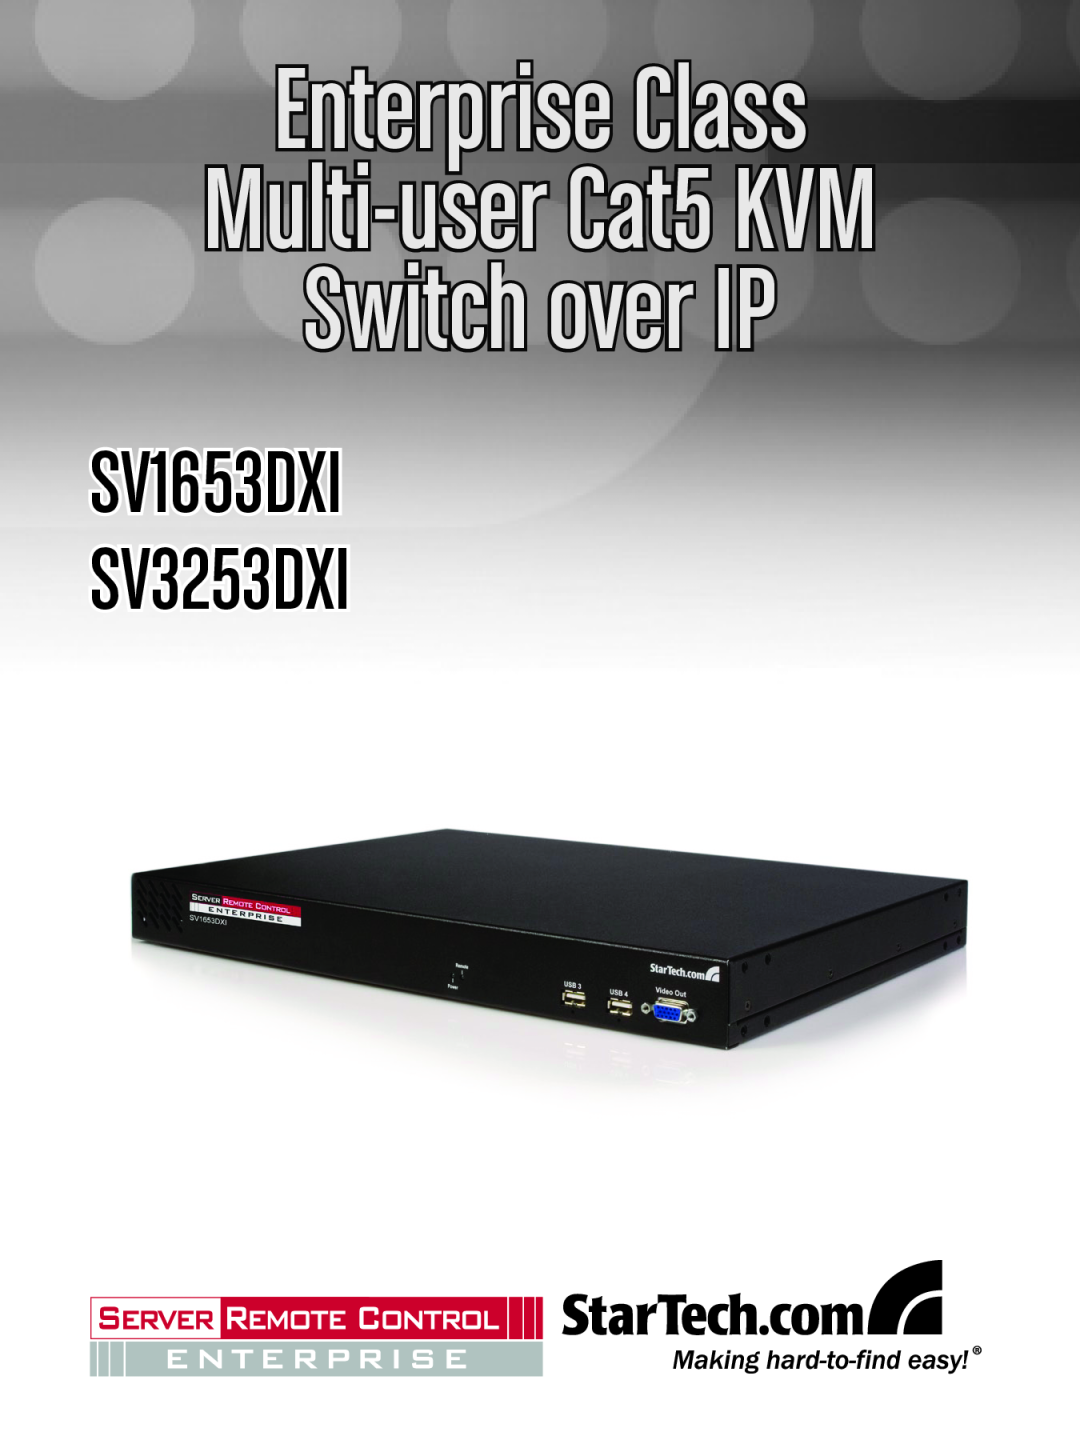 StarTech.com manual Switch over IP, Enterprise Class, Multi-user Cat5 KVM, SV1653DXI SV3253DXI 